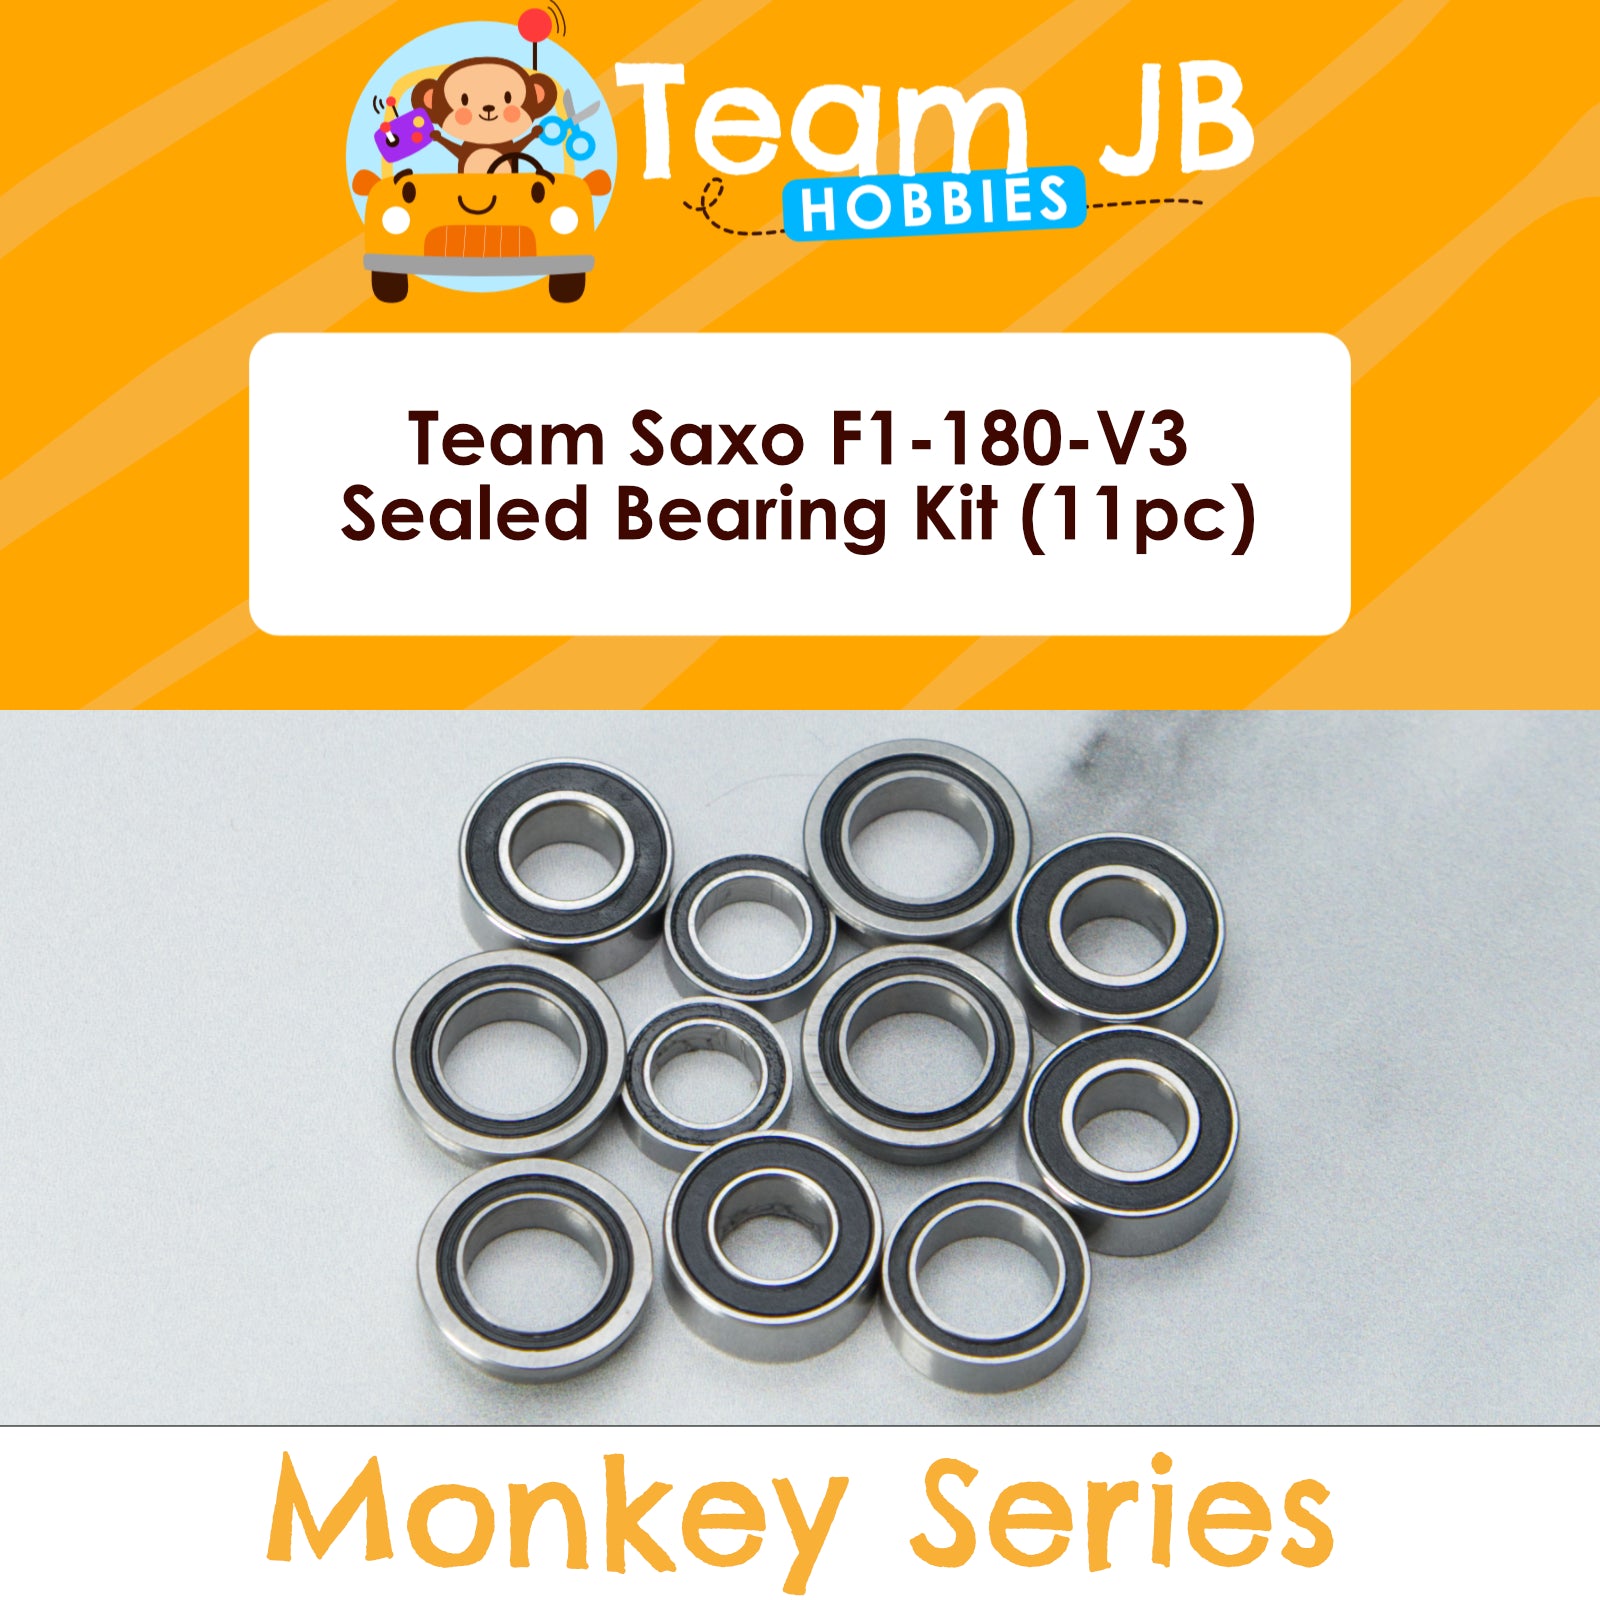 Team Saxo F1-180-V3 - Sealed Bearing Kit